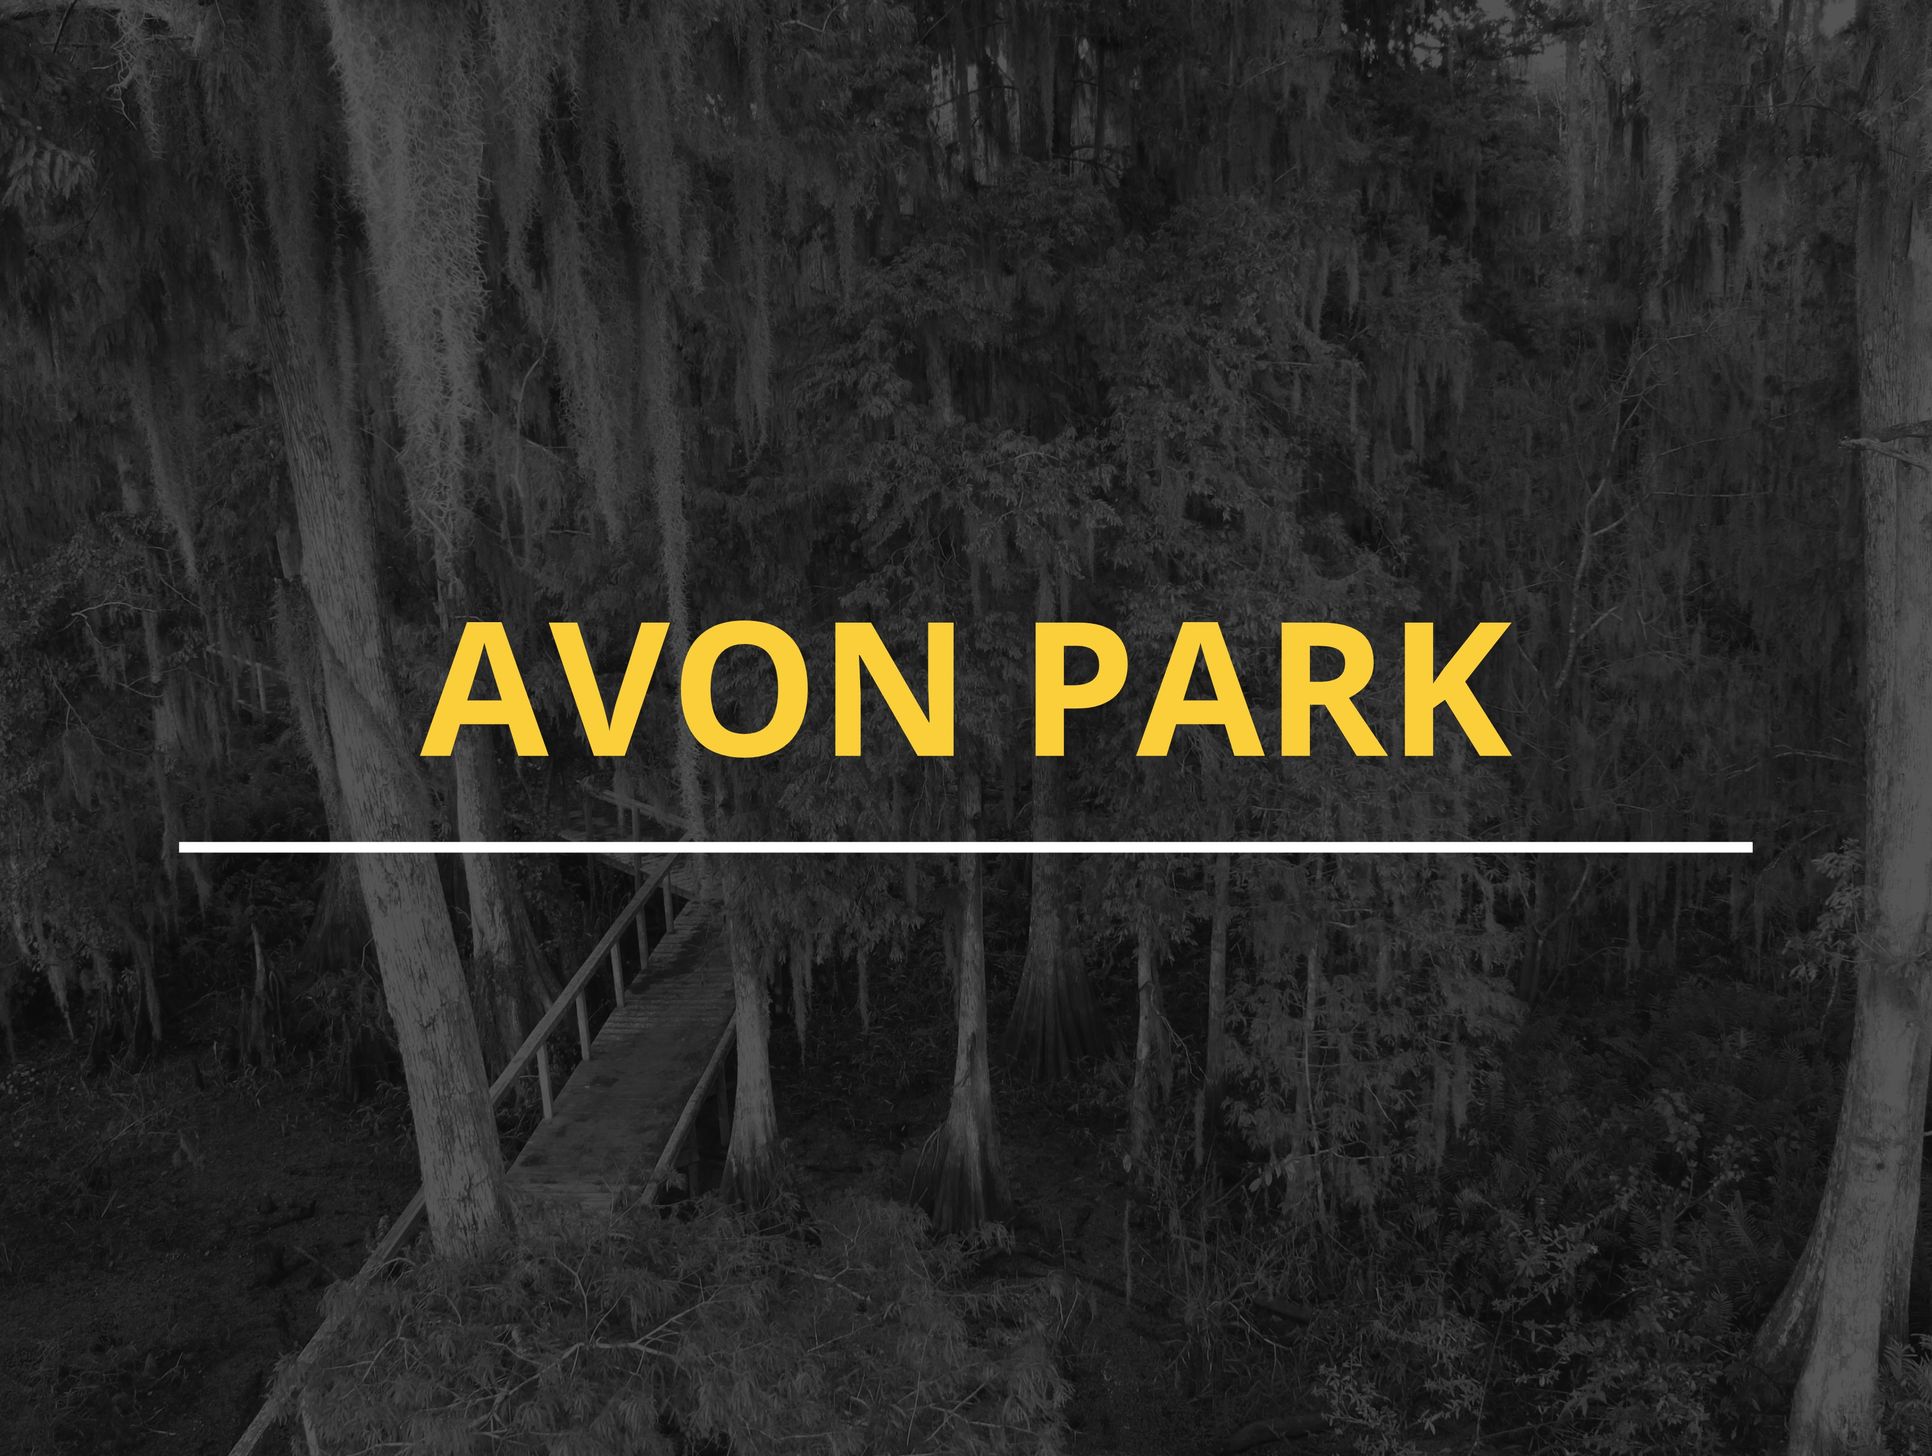 Avon Park,33825